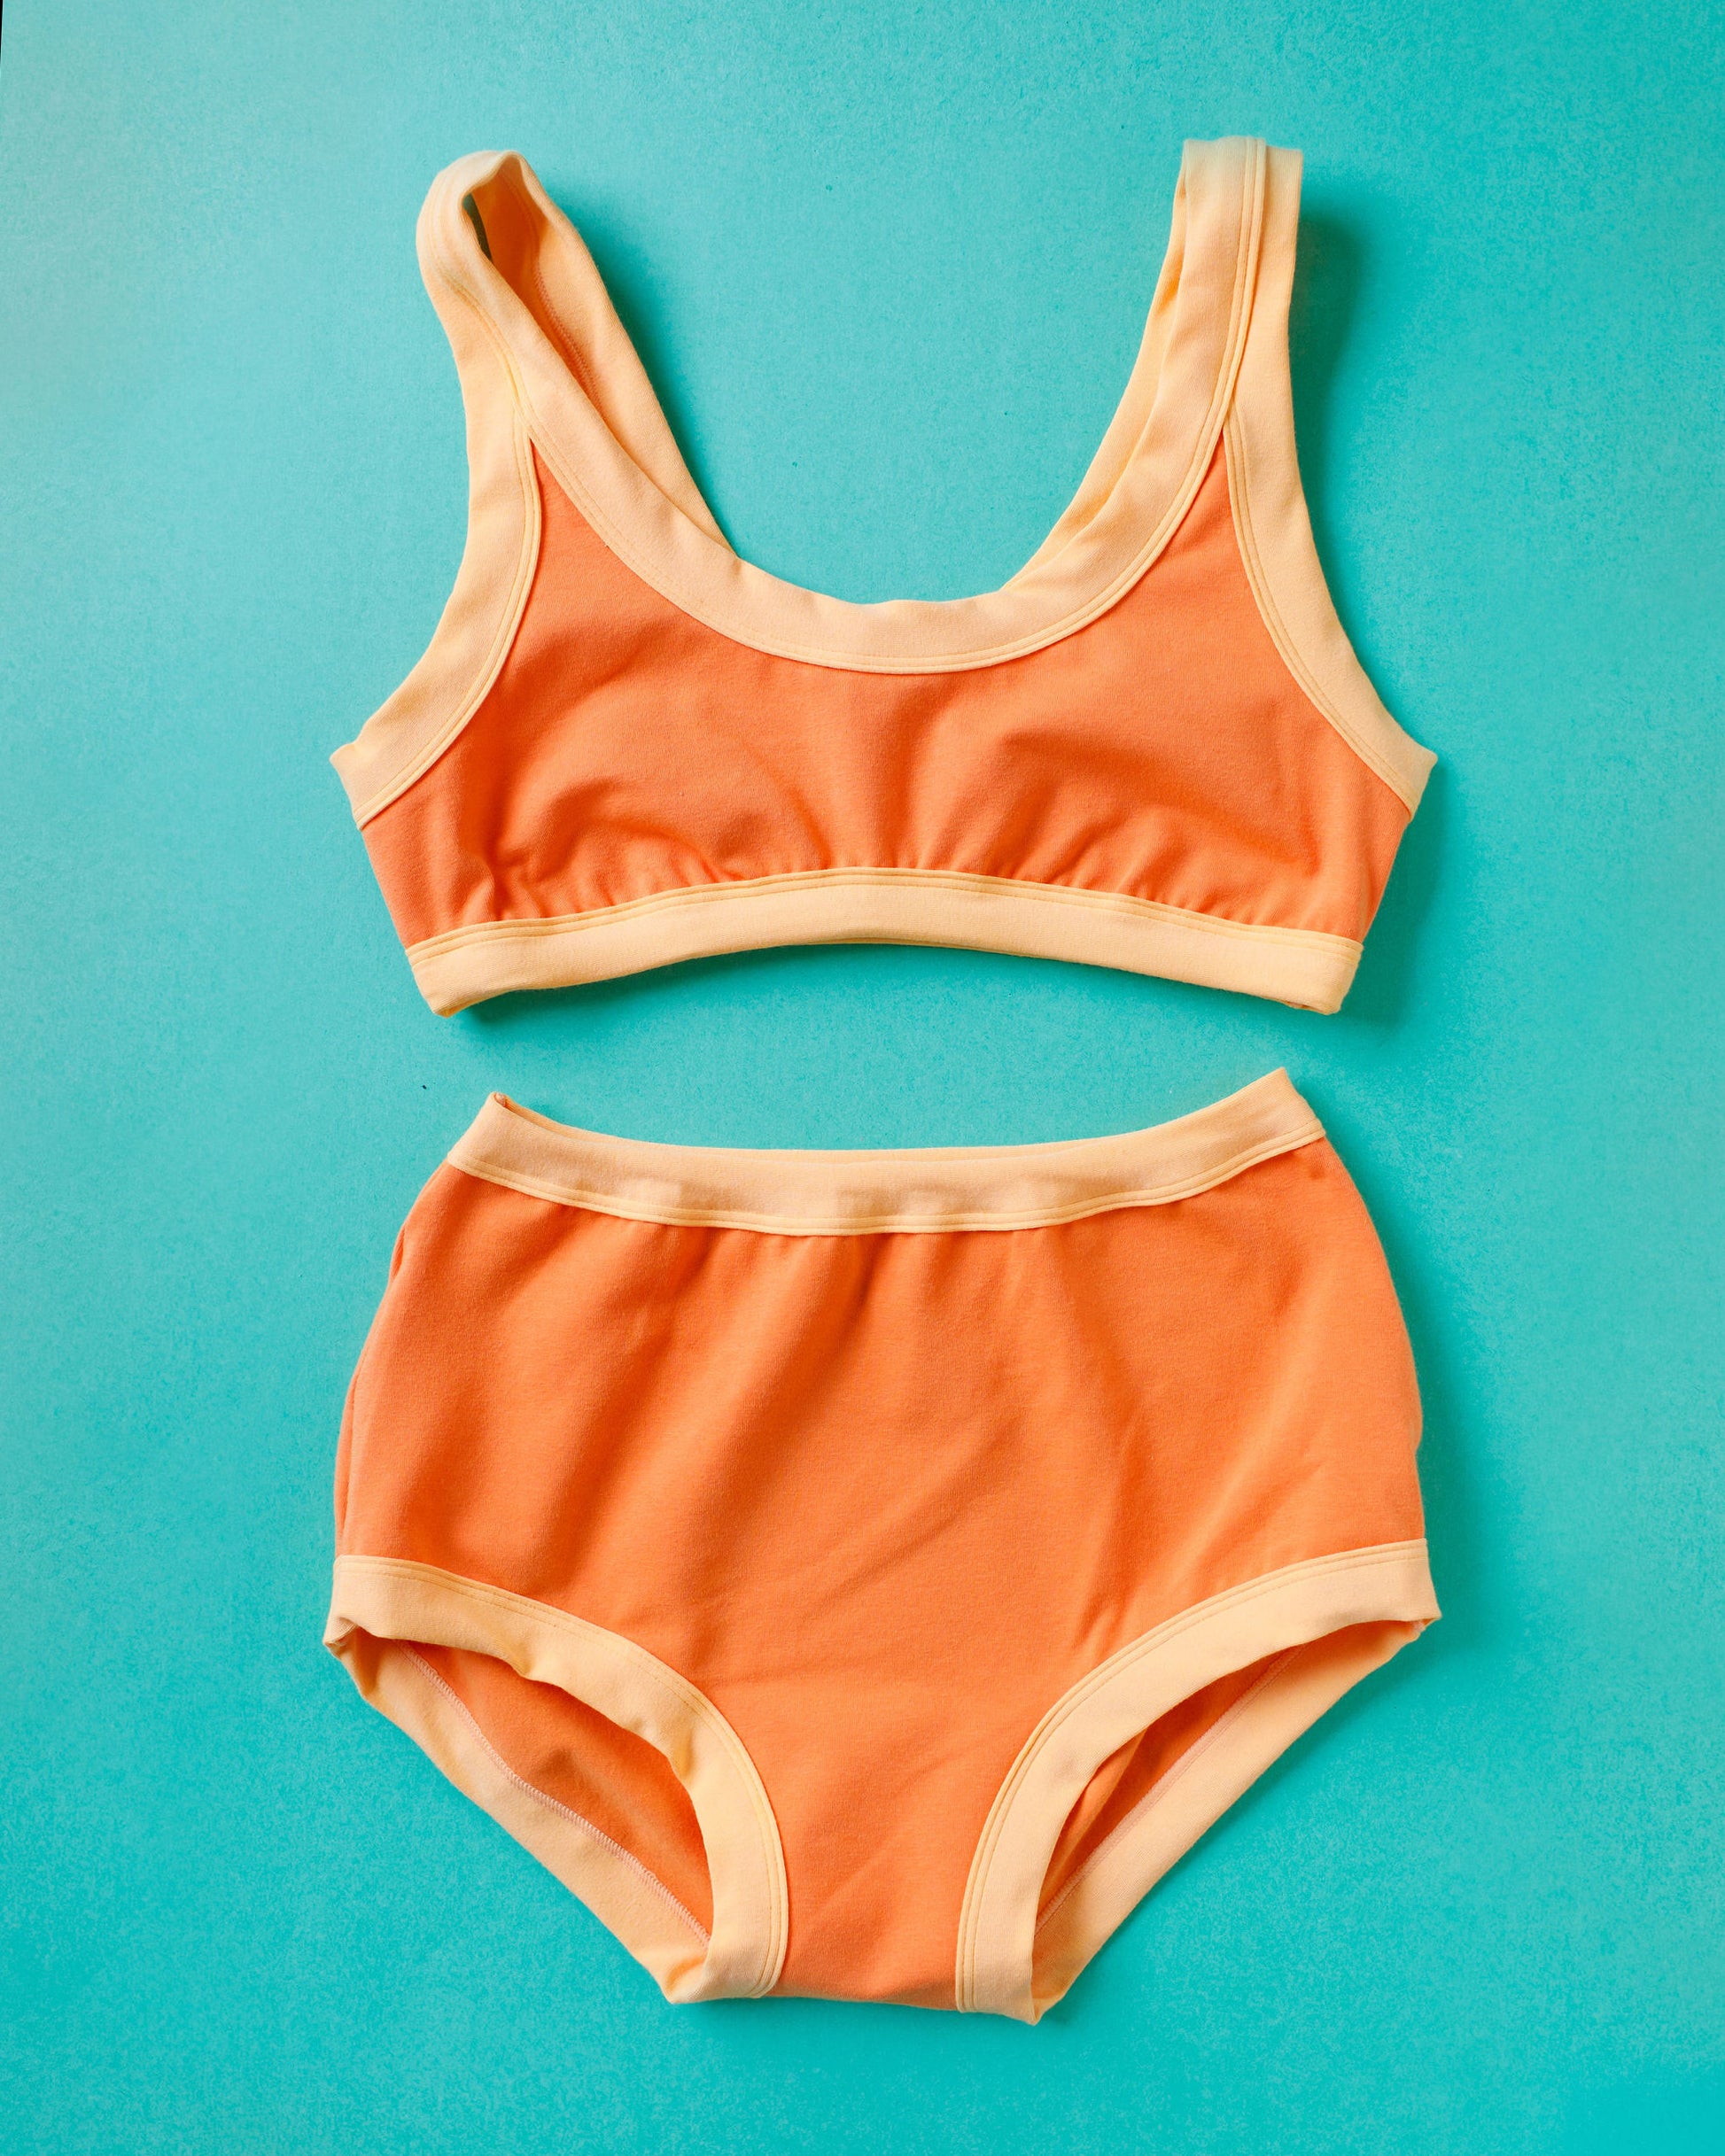 Flat lay of Thunderpants Original style underwear and Bralette in Creamsicle: Dark orange with light orange binding.